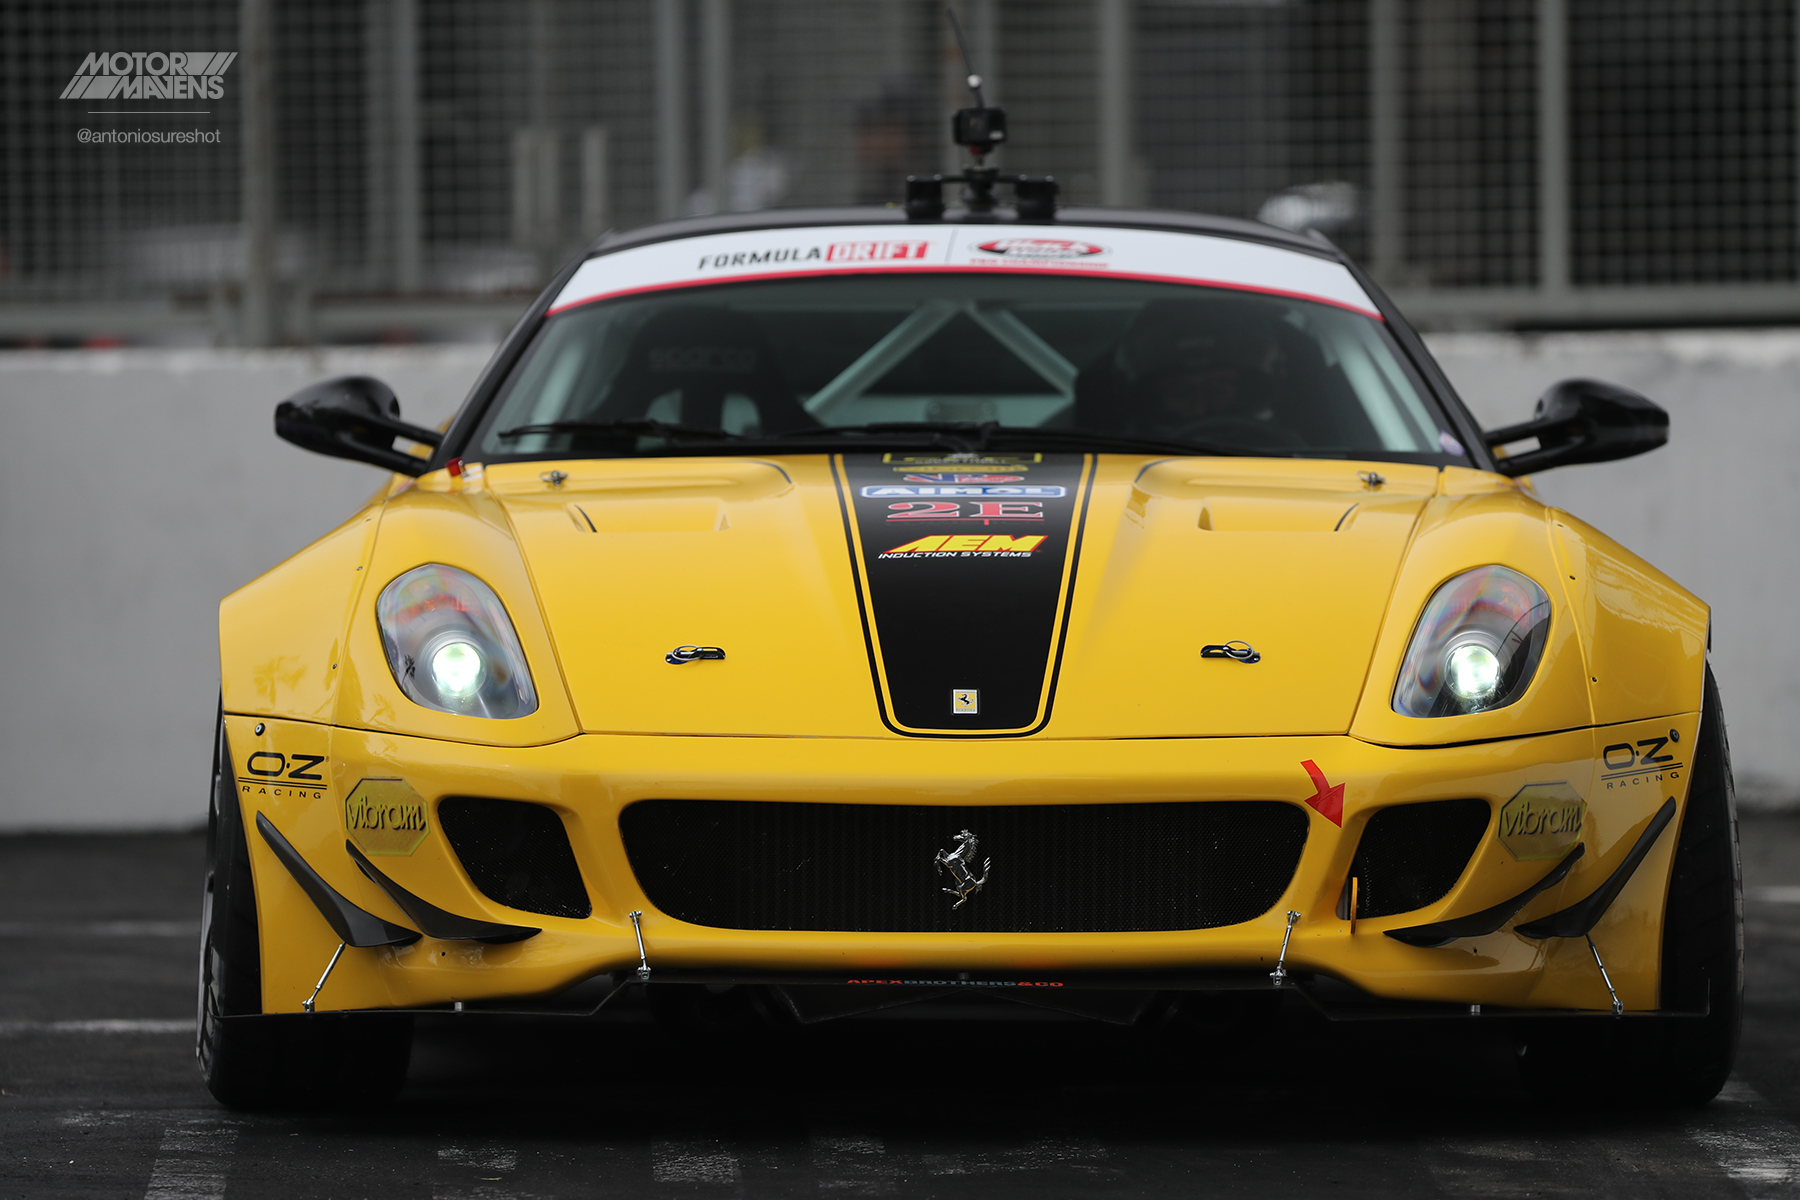 Federico Sceriffo, Ferrari 599, Formula Drift, Chelsea Denofa, Mustang RTR